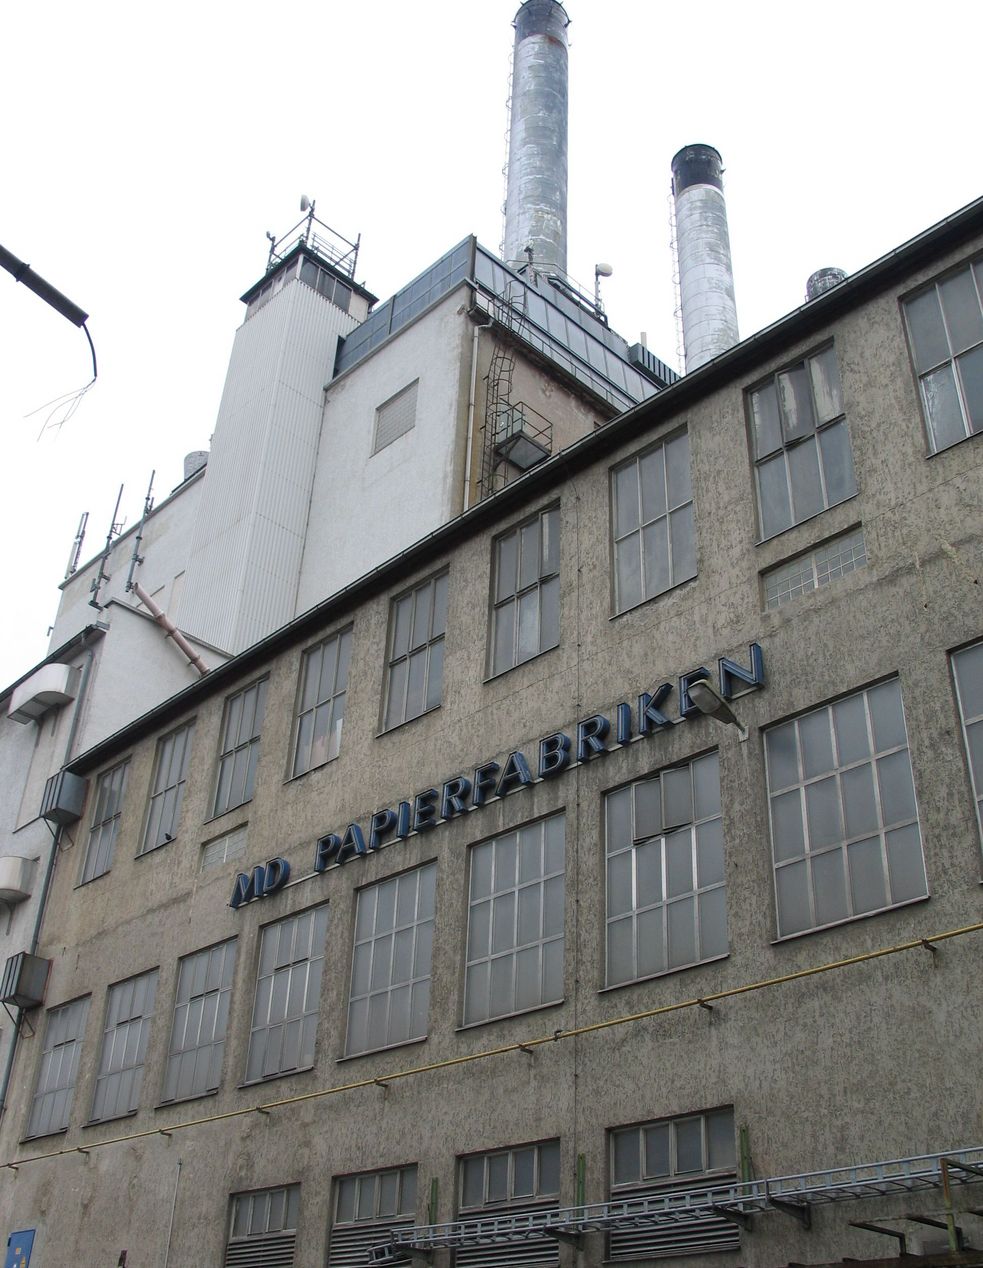 MD-Papierfabrik